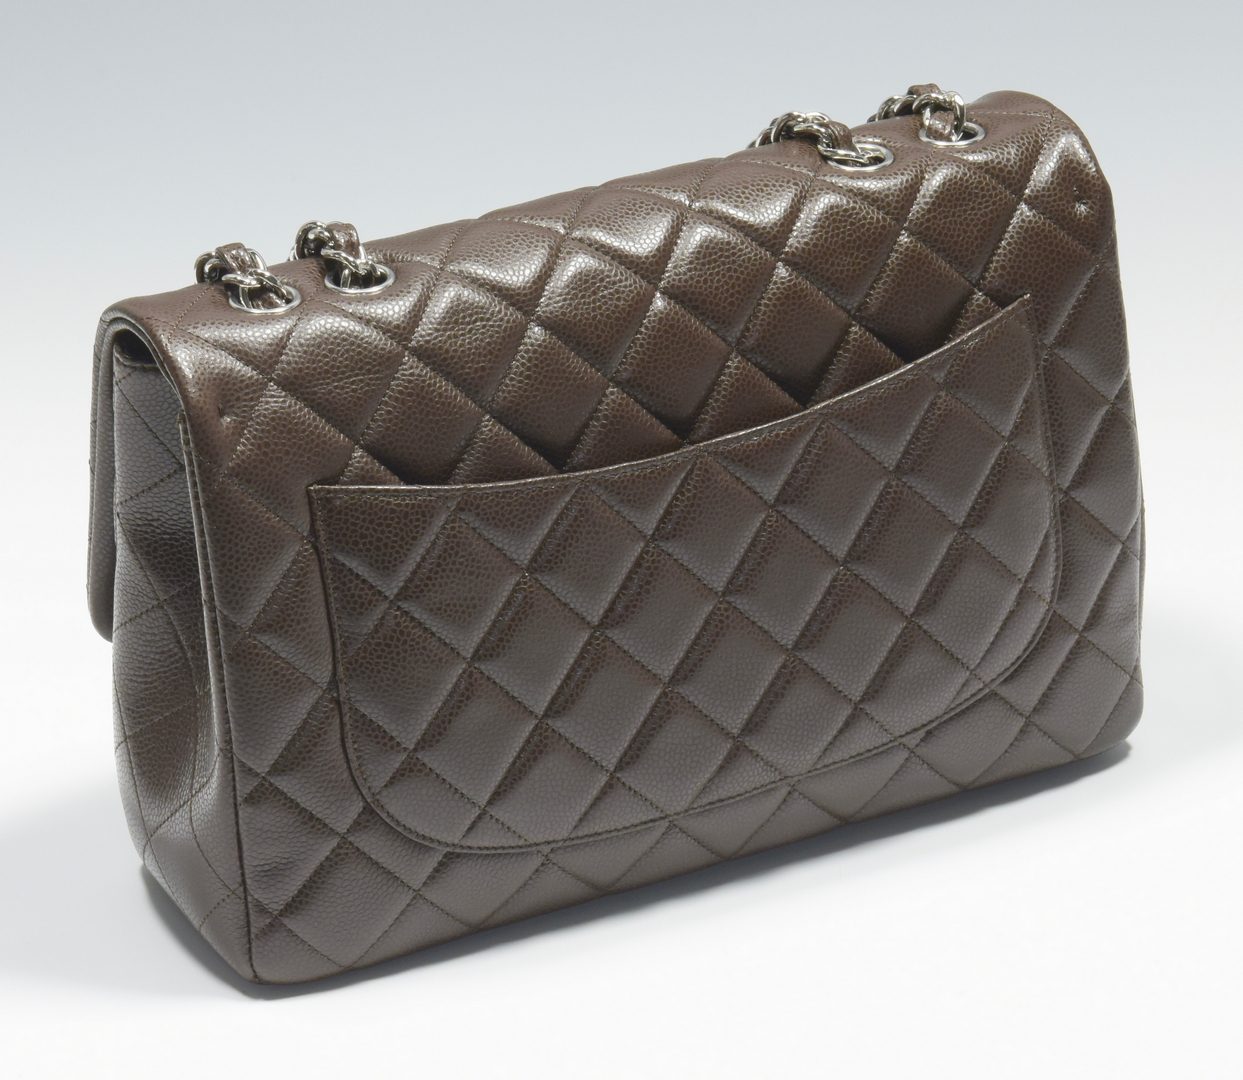 Lot 923: Chanel Jumbo Classic Flap Bag, Dark Brown Leather